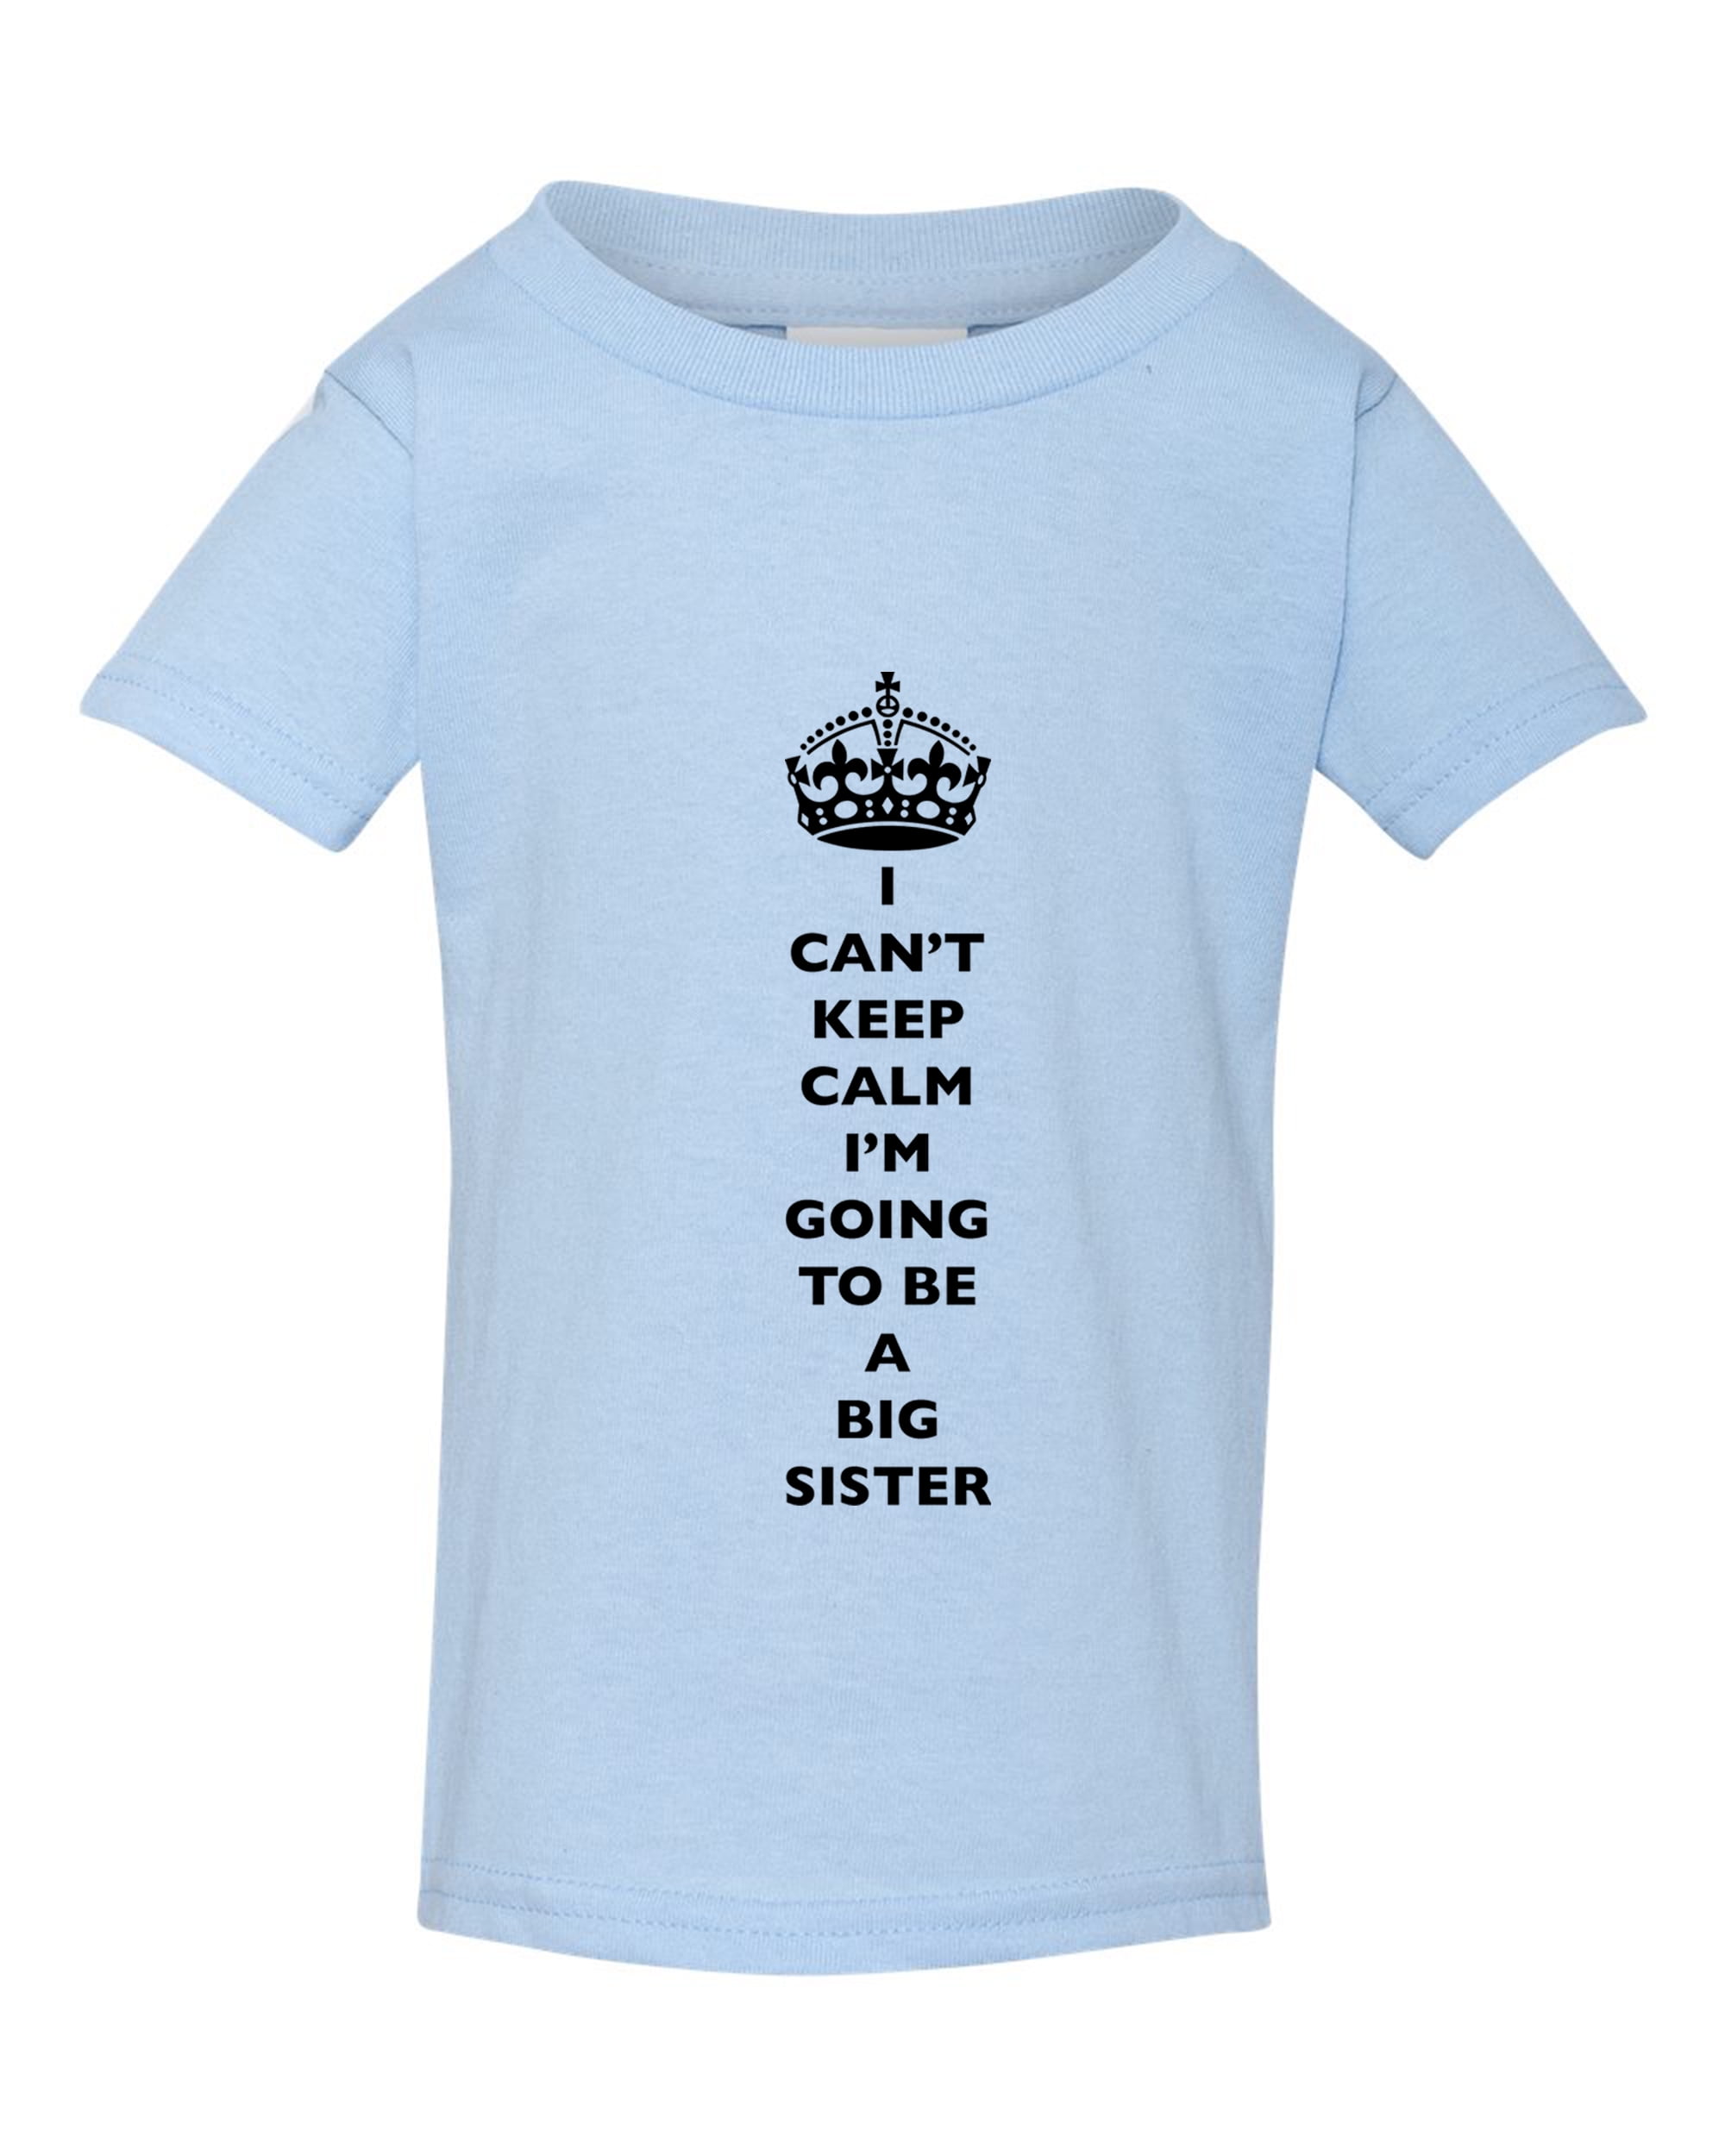 Keep Calm I'm A Little Sister Baby Toddler Kid T-shirt Tee 6mo Thru 7t 